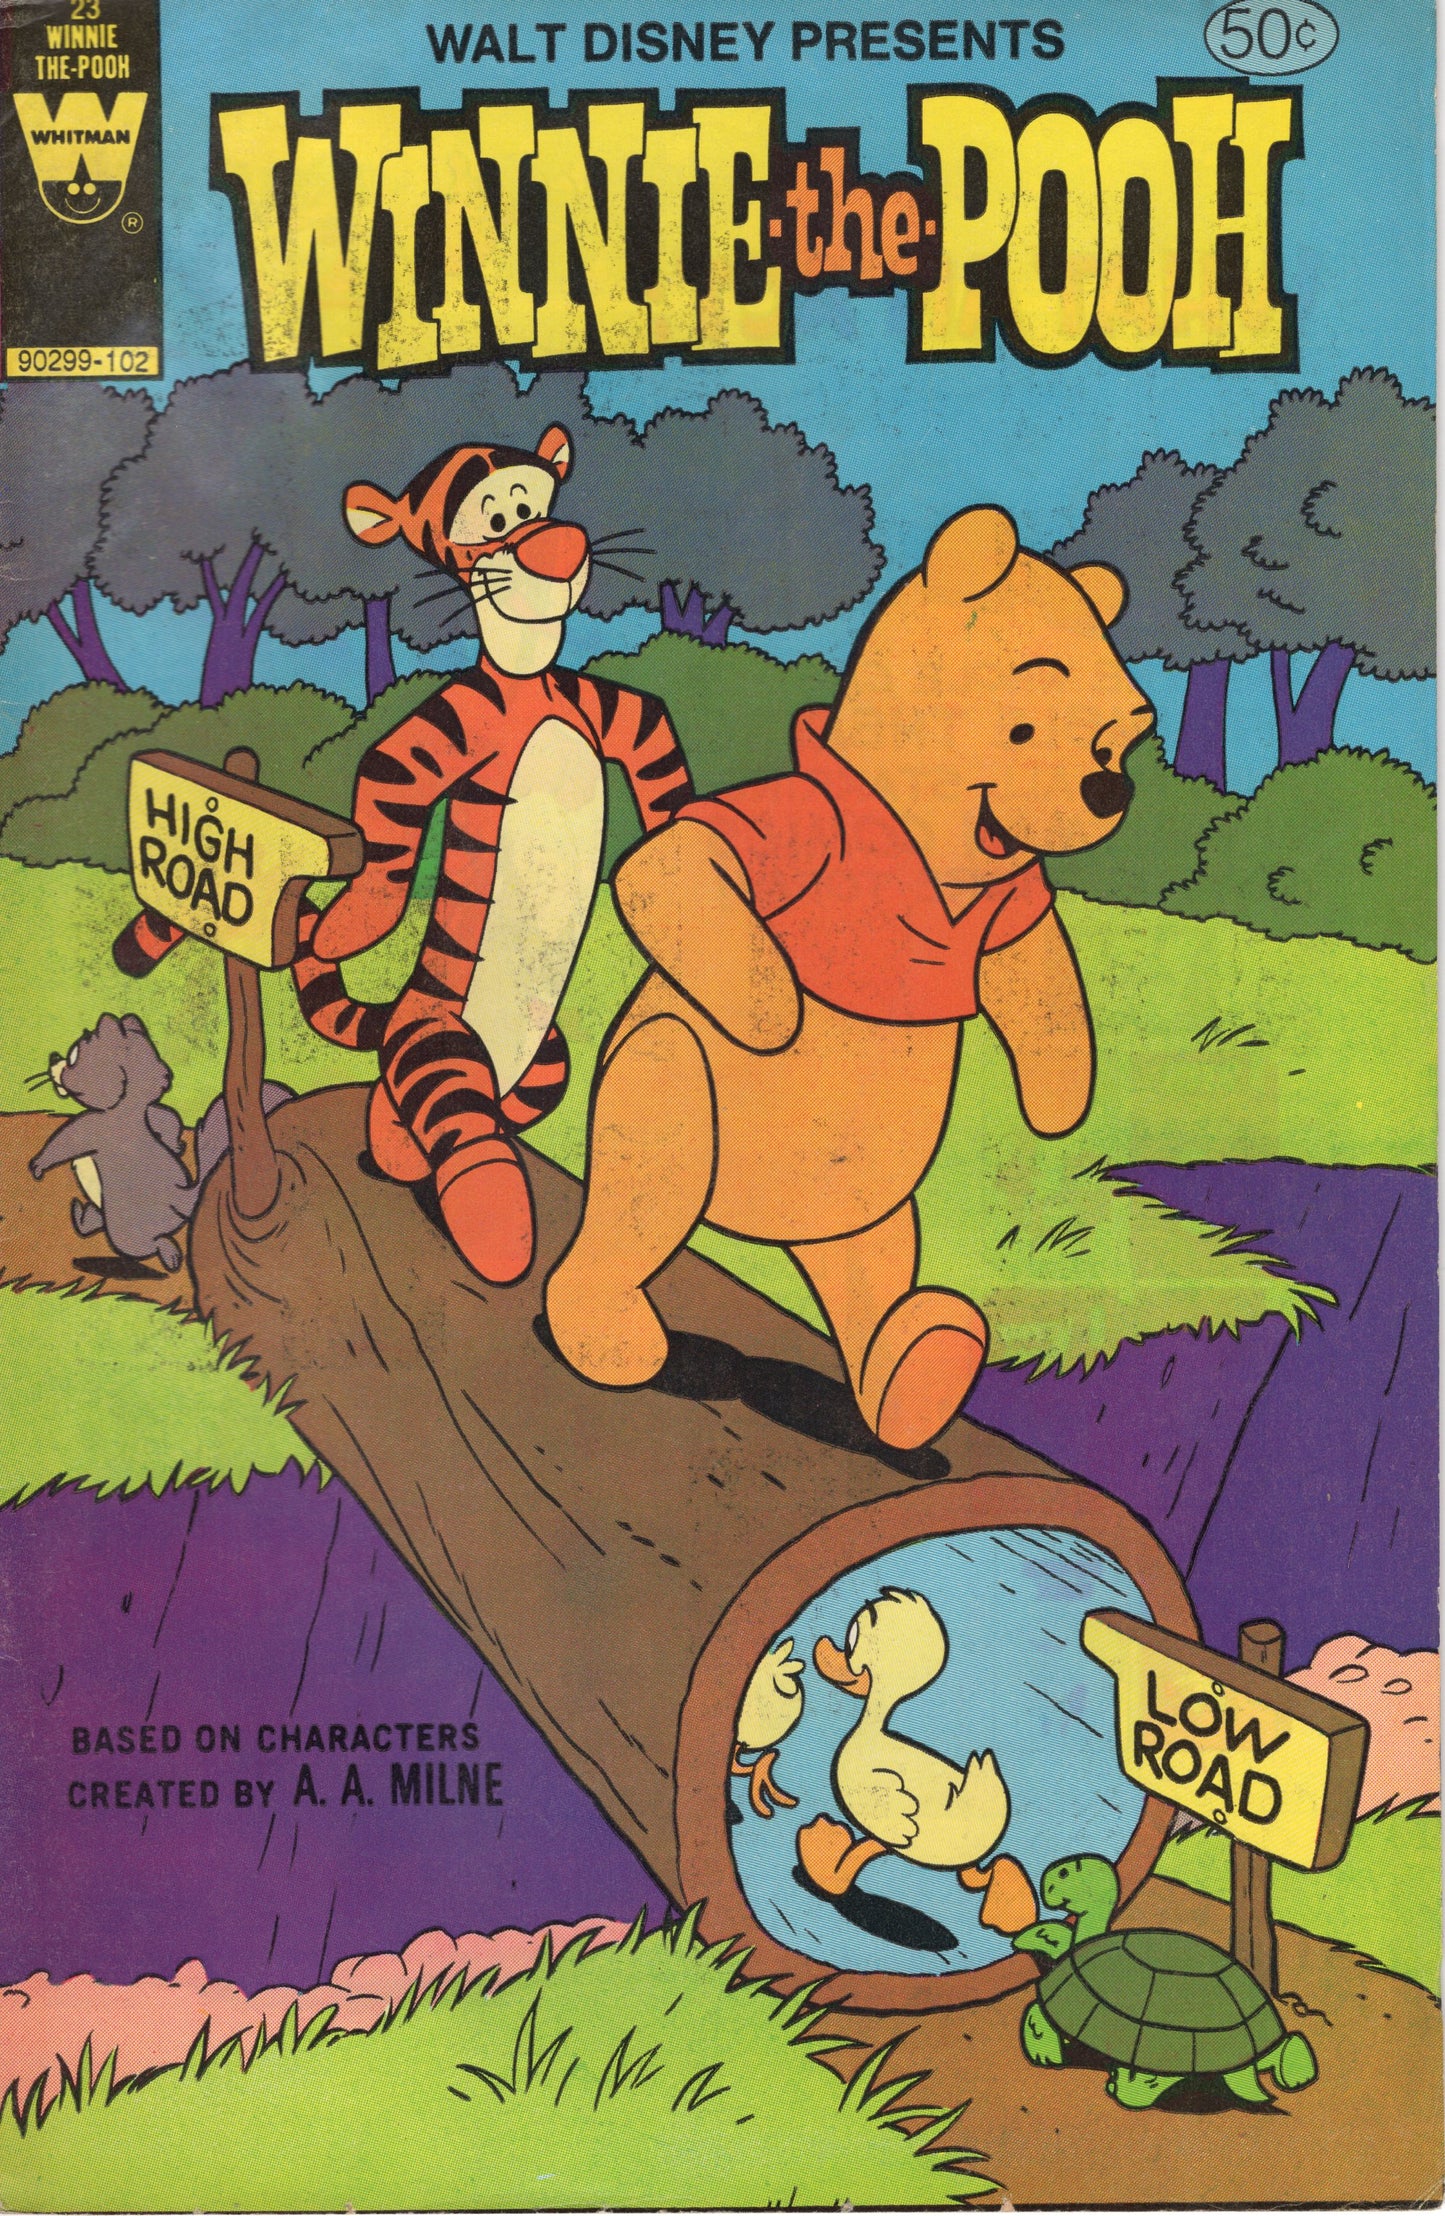 Winnie the Pooh Issue #3 (Feb., 1981 - Whitman Comics) VG/FN